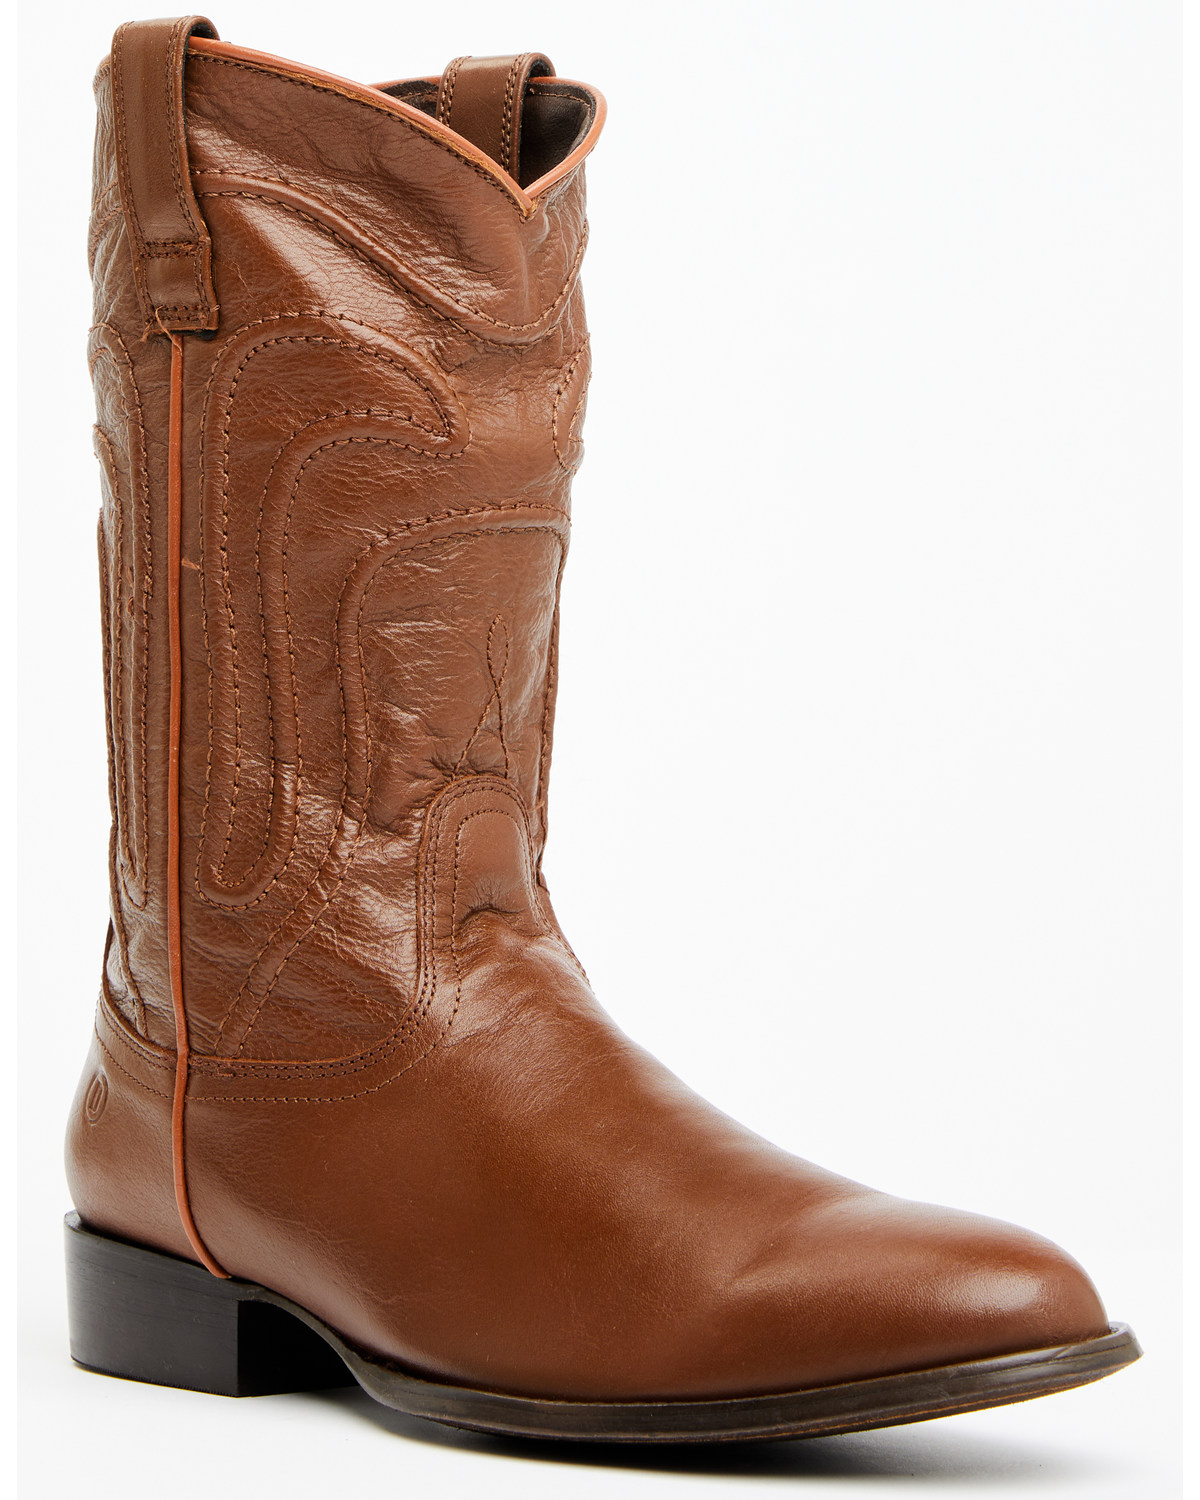 Dingo Men's Montana Western Boots - Medium Toe